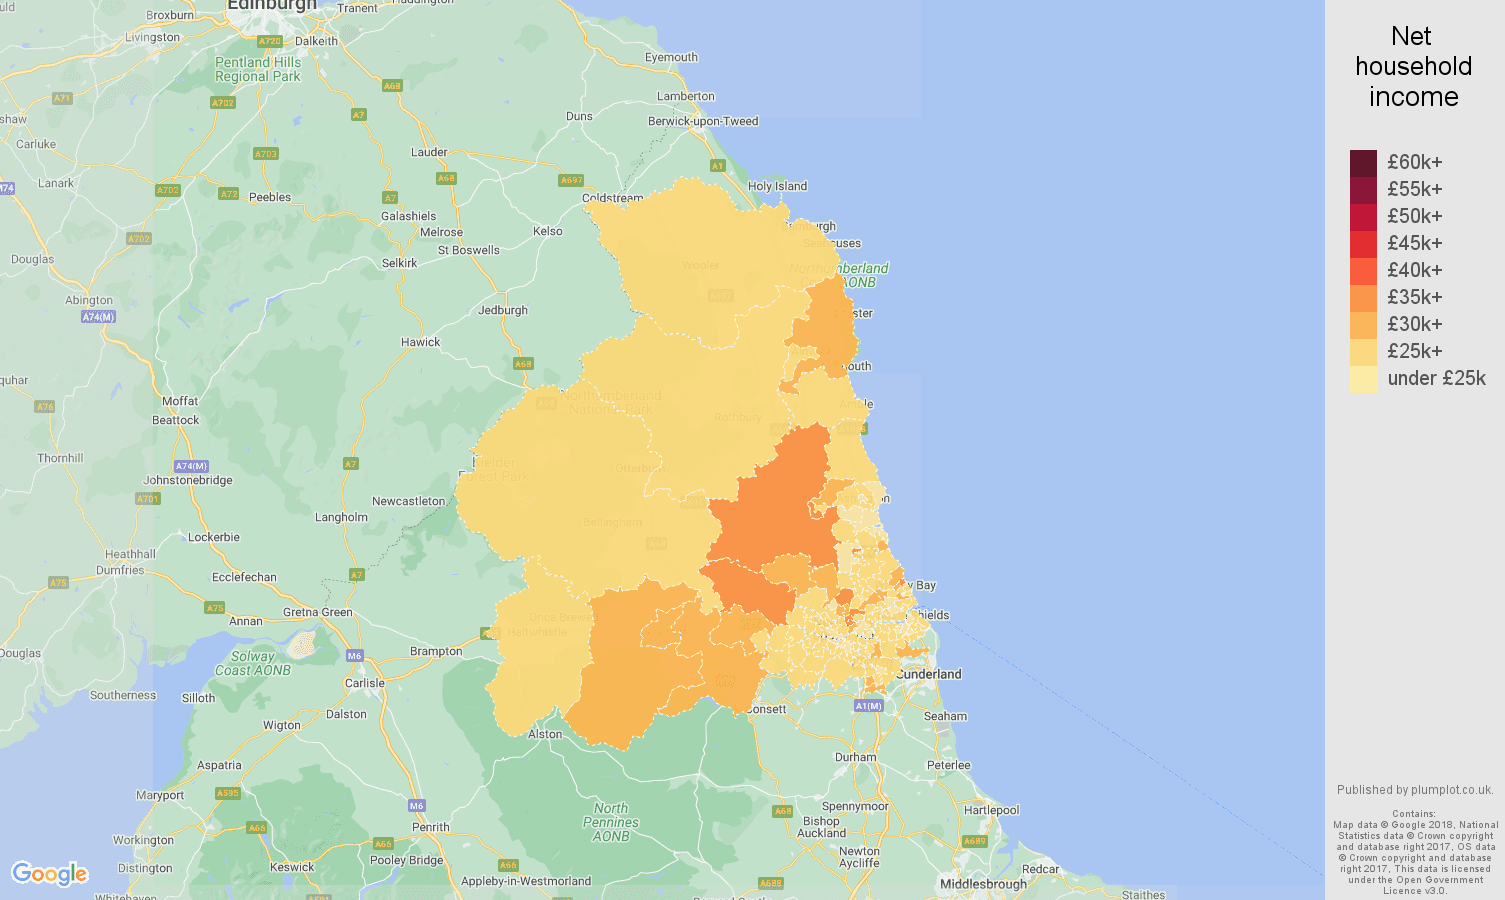 Newcastle upon Tyne net household income map